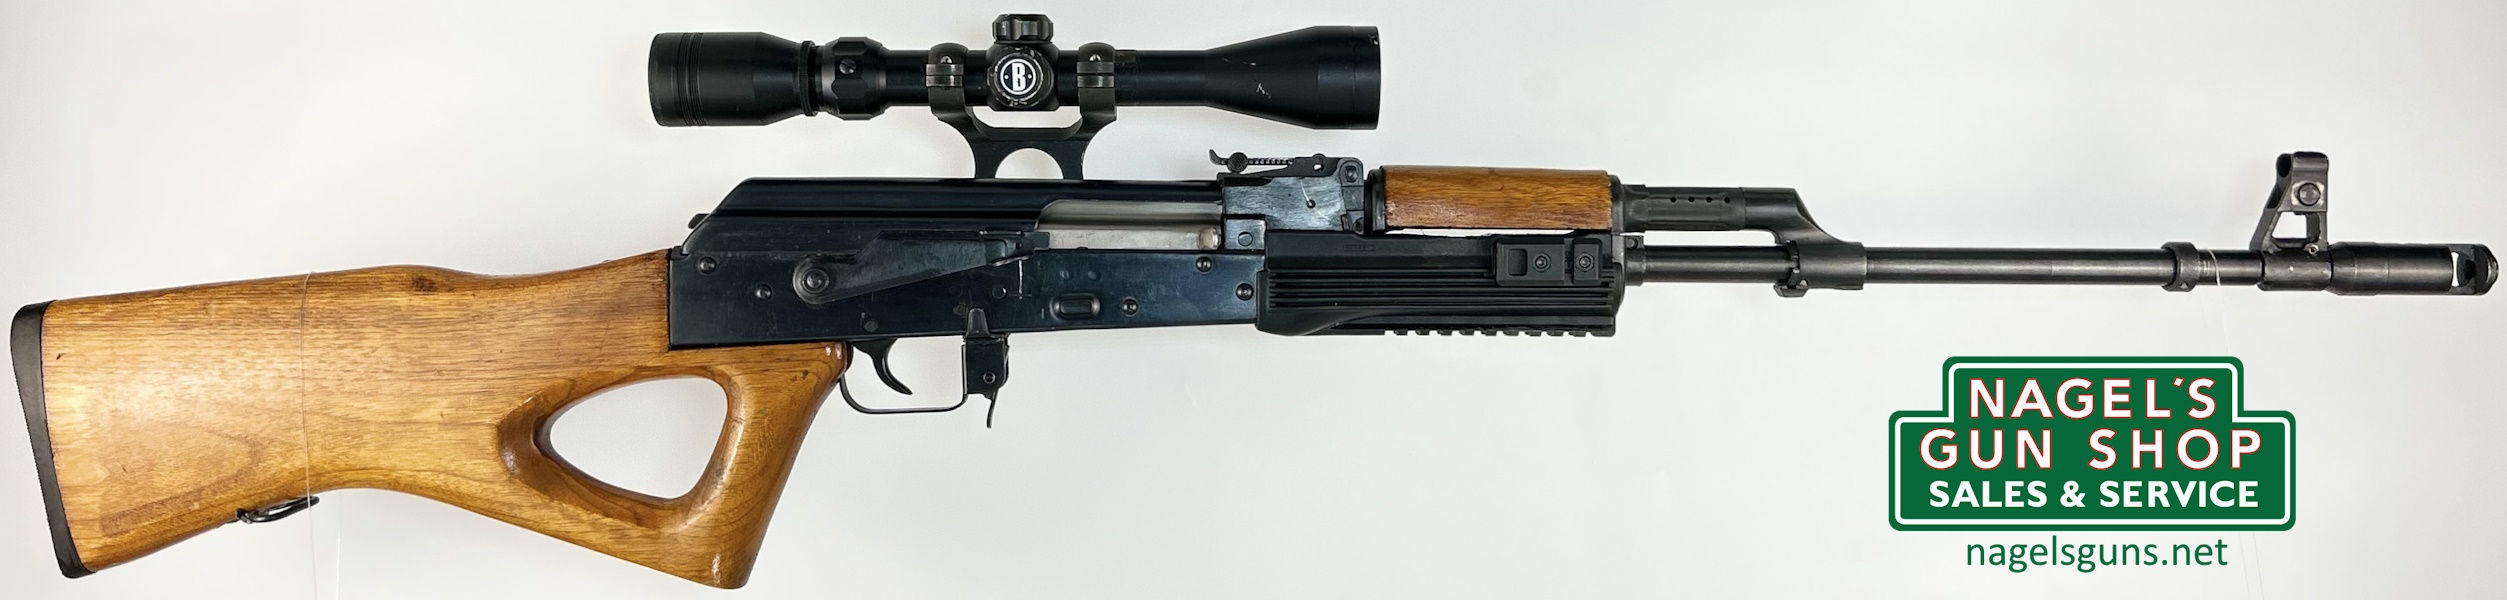 Norinco NHM91 7.62x39mm Rifle